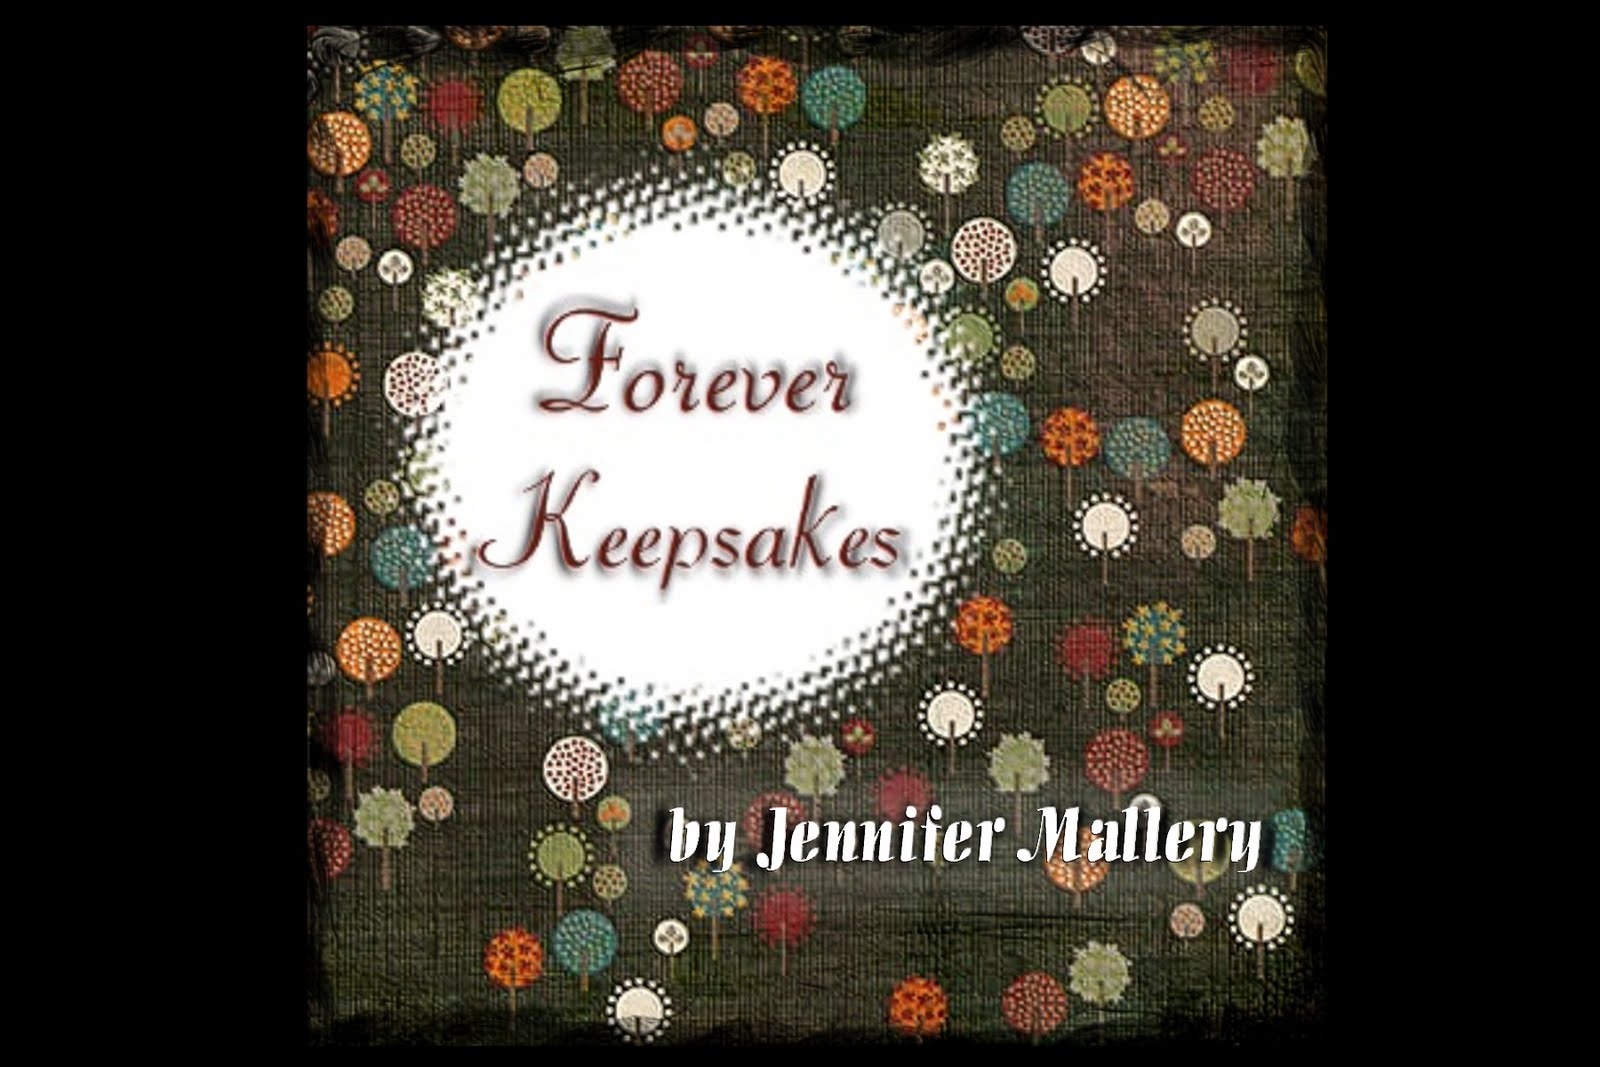 Forever Keepsakes by Jennifer Mallery